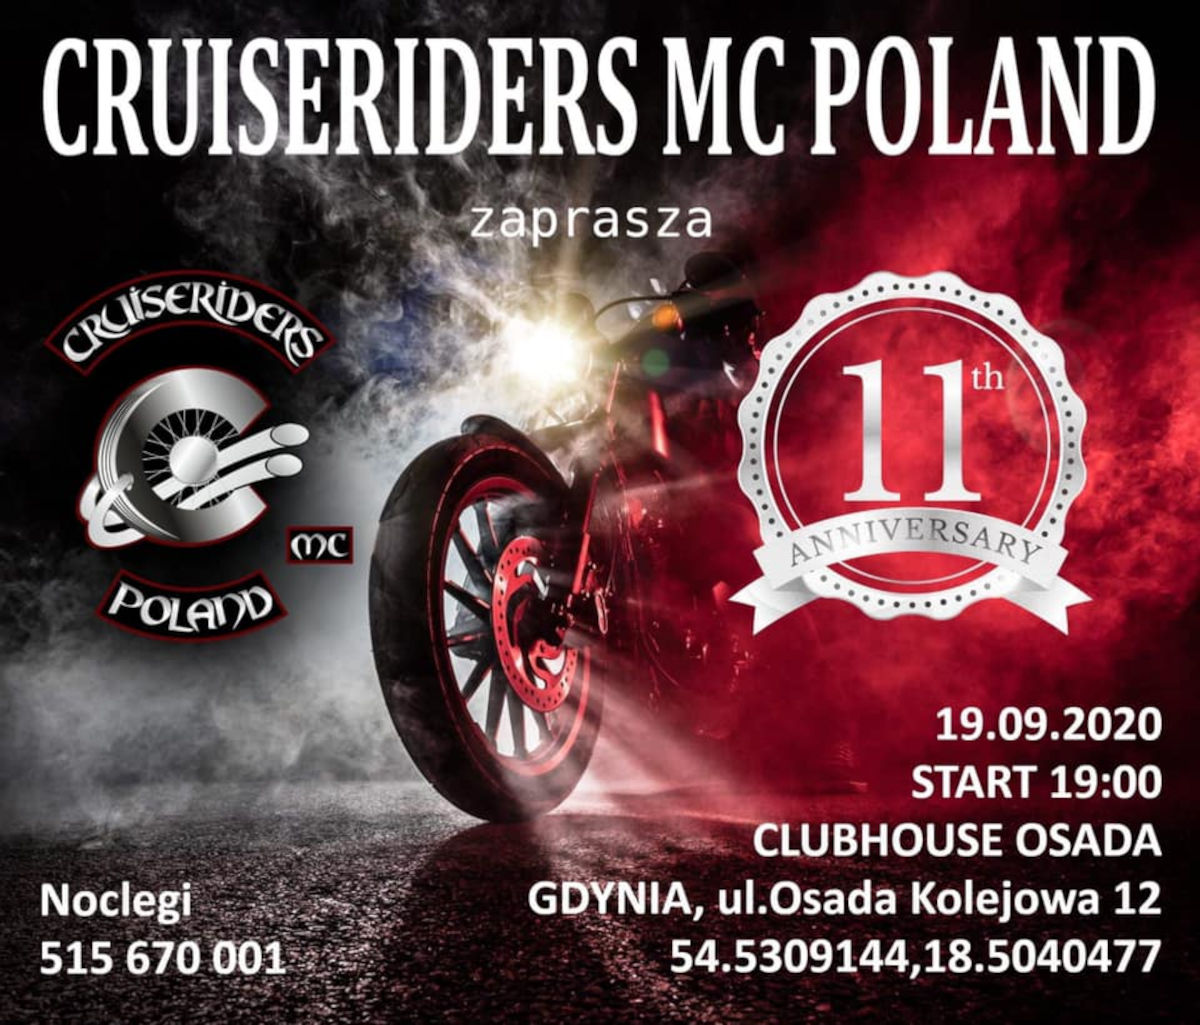 11 rocznica powstania Cruiseriders MC Poland